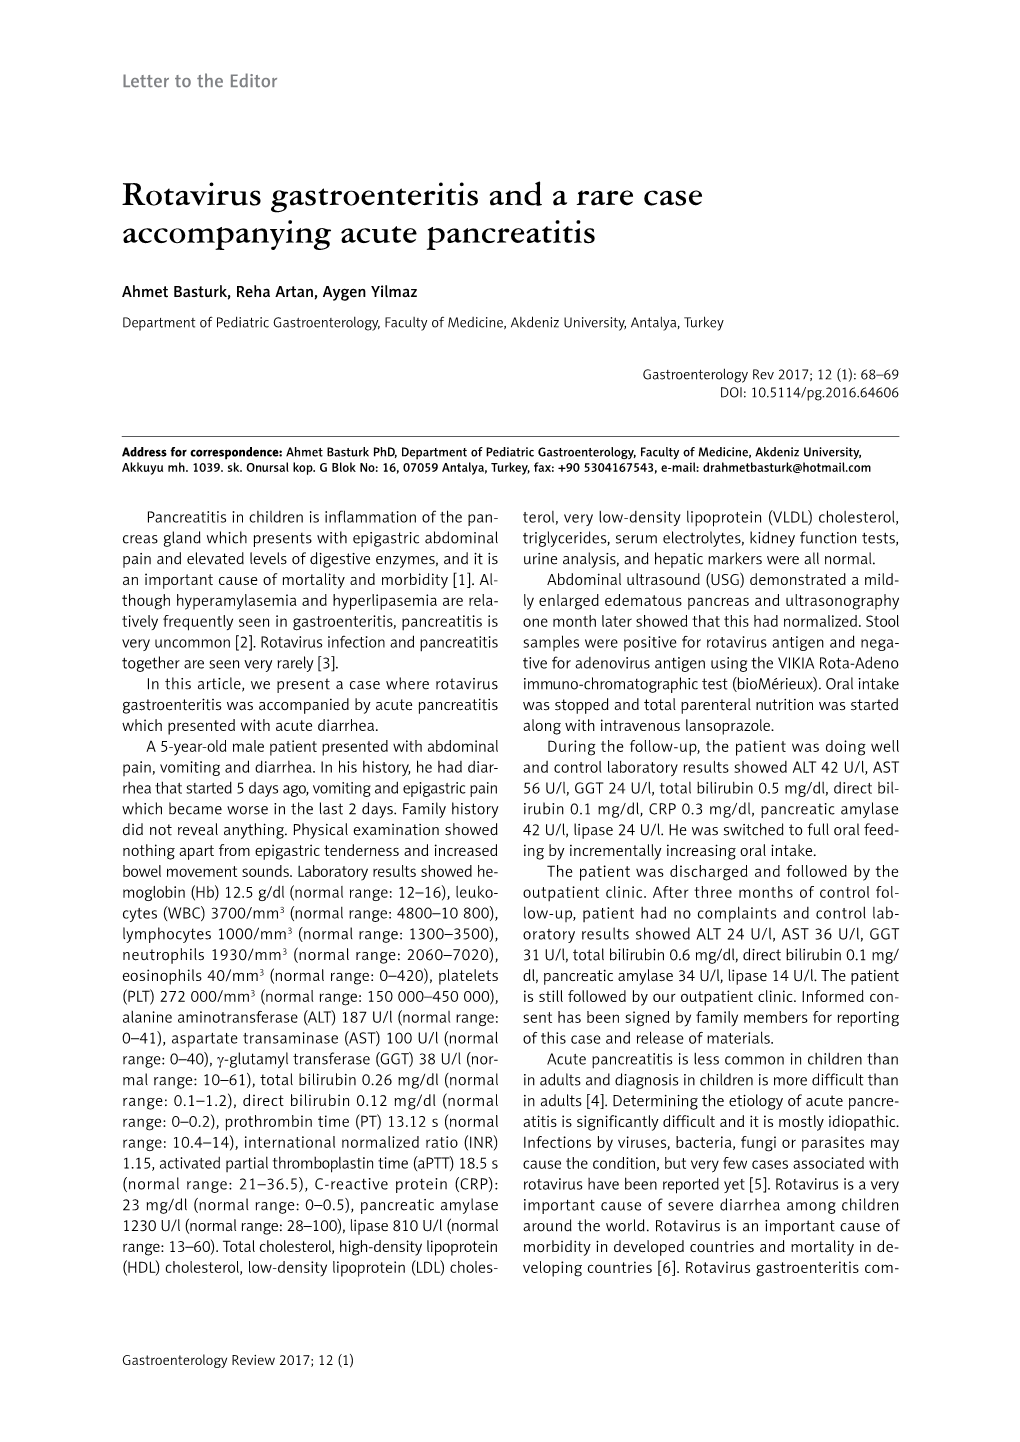 Rotavirus Gastroenteritis and a Rare Case Accompanying Acute Pancreatitis